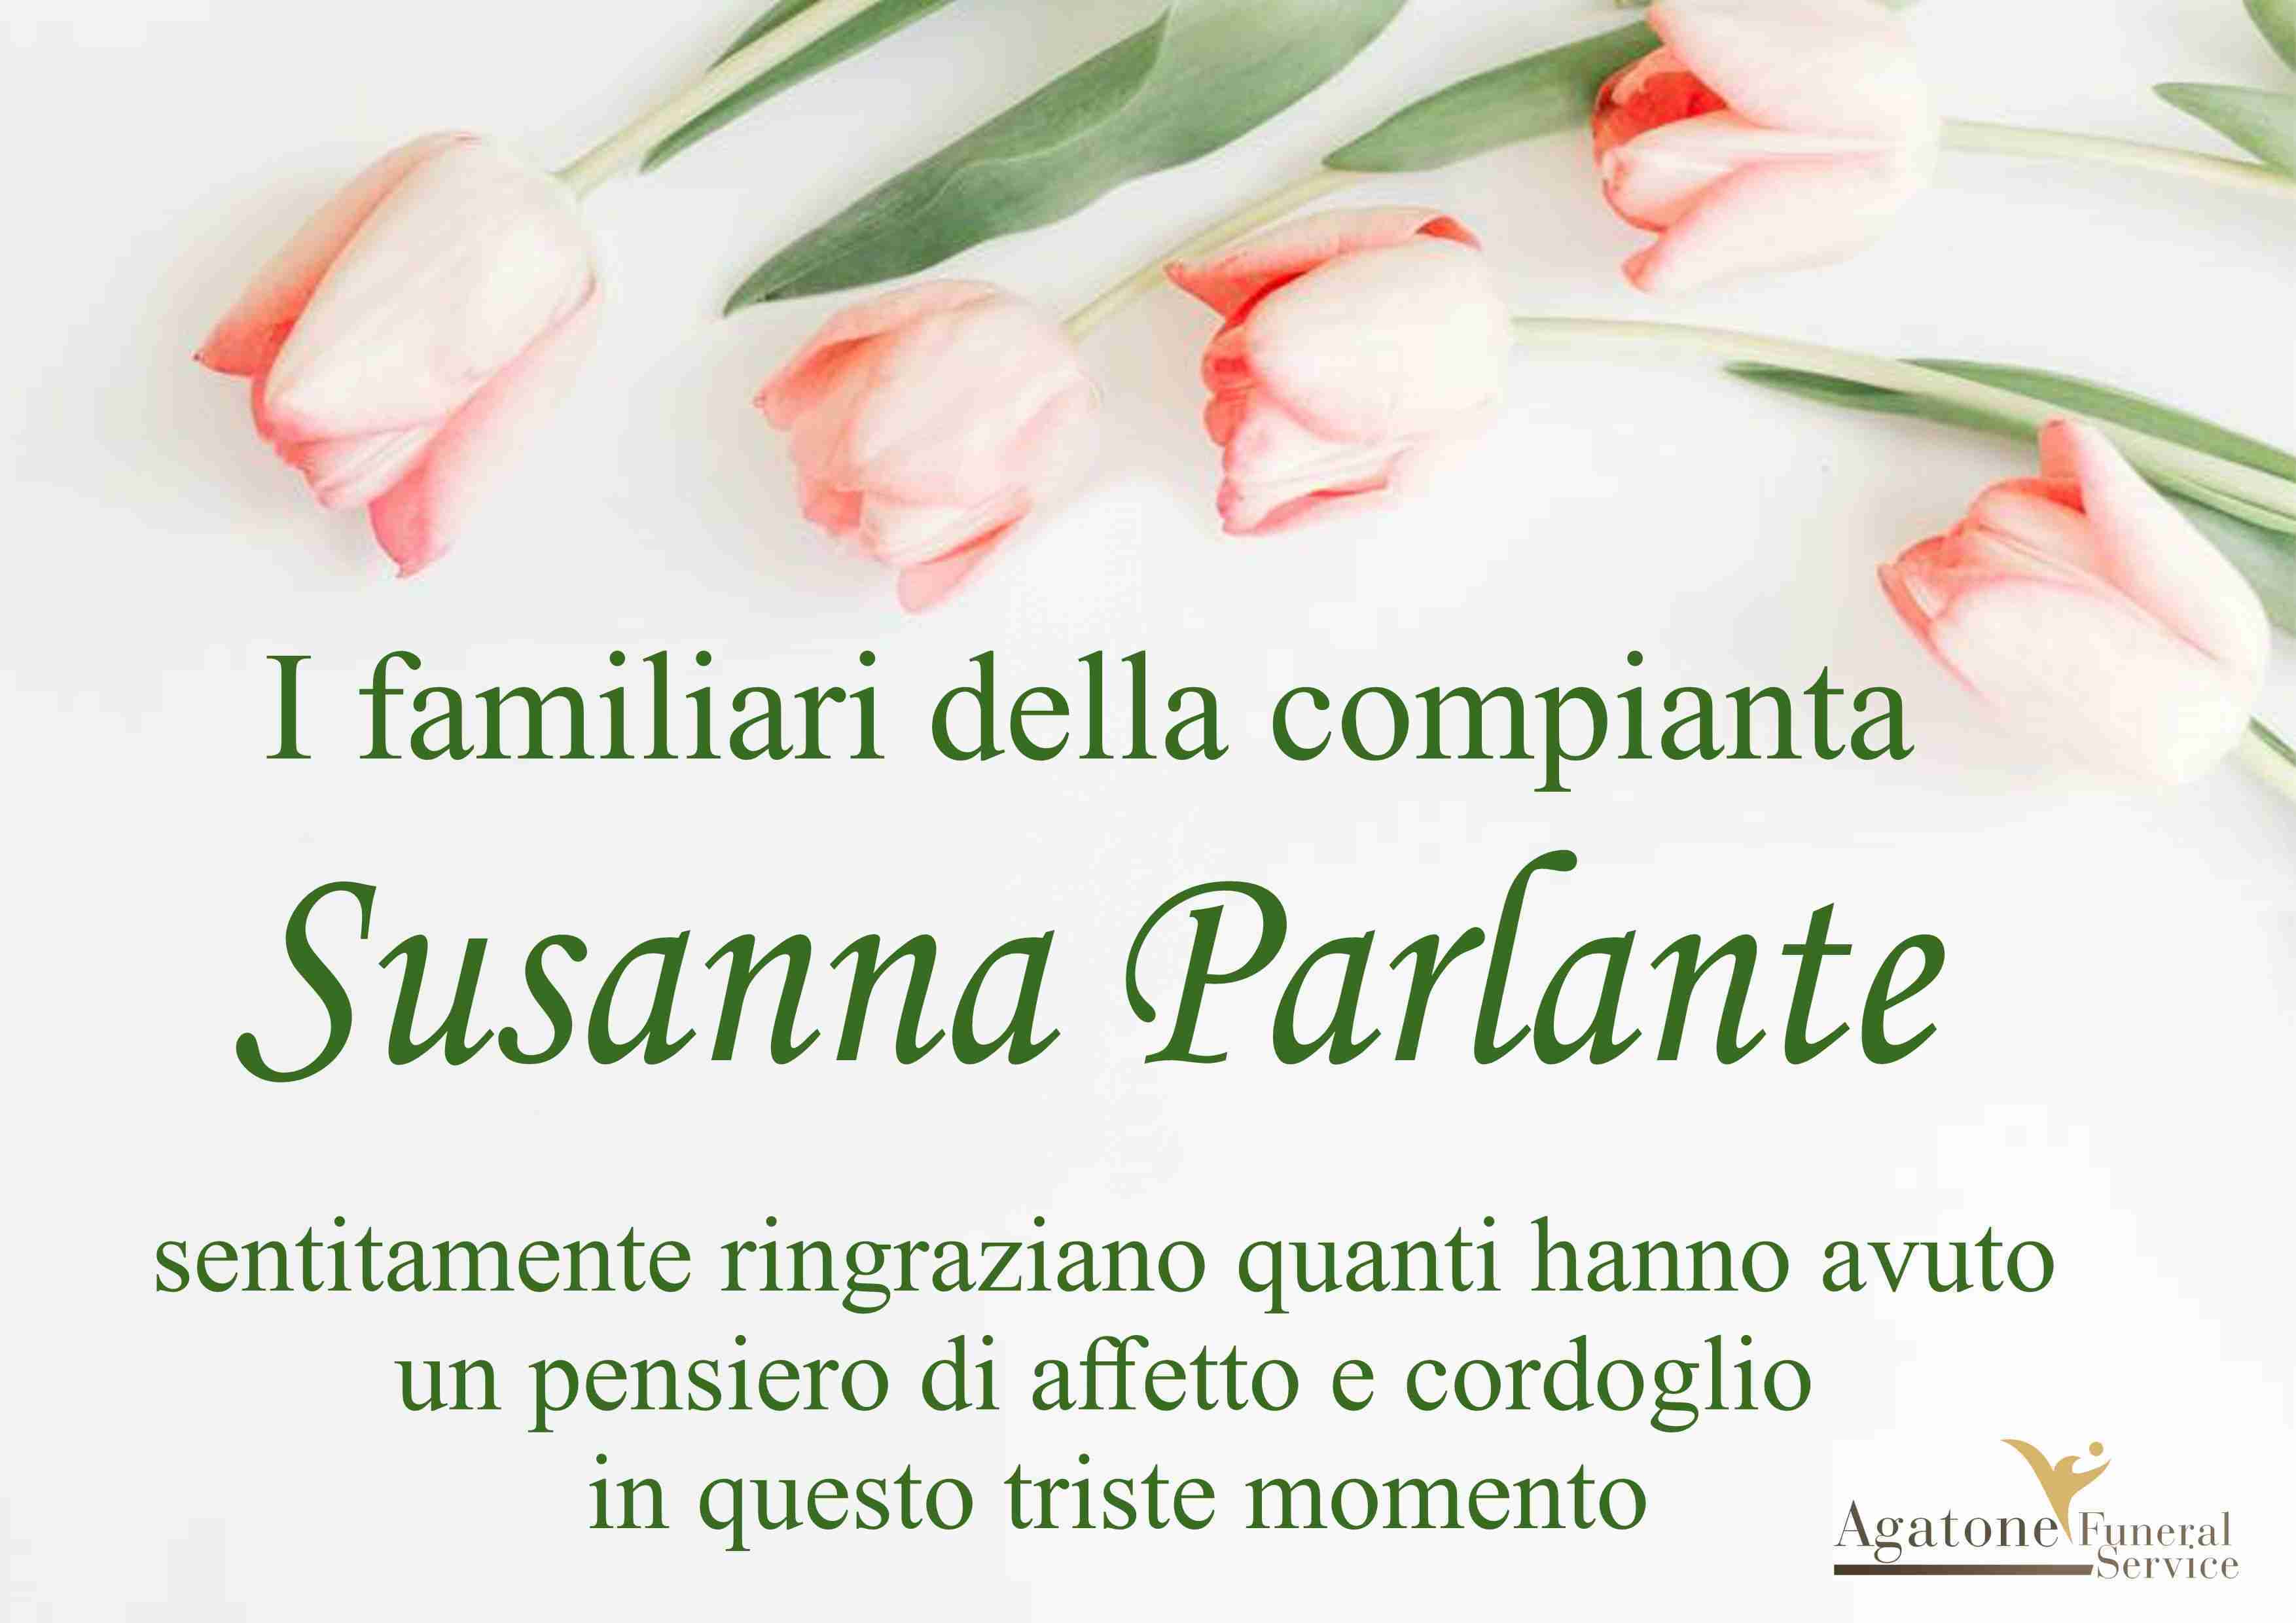 Susanna Parlante